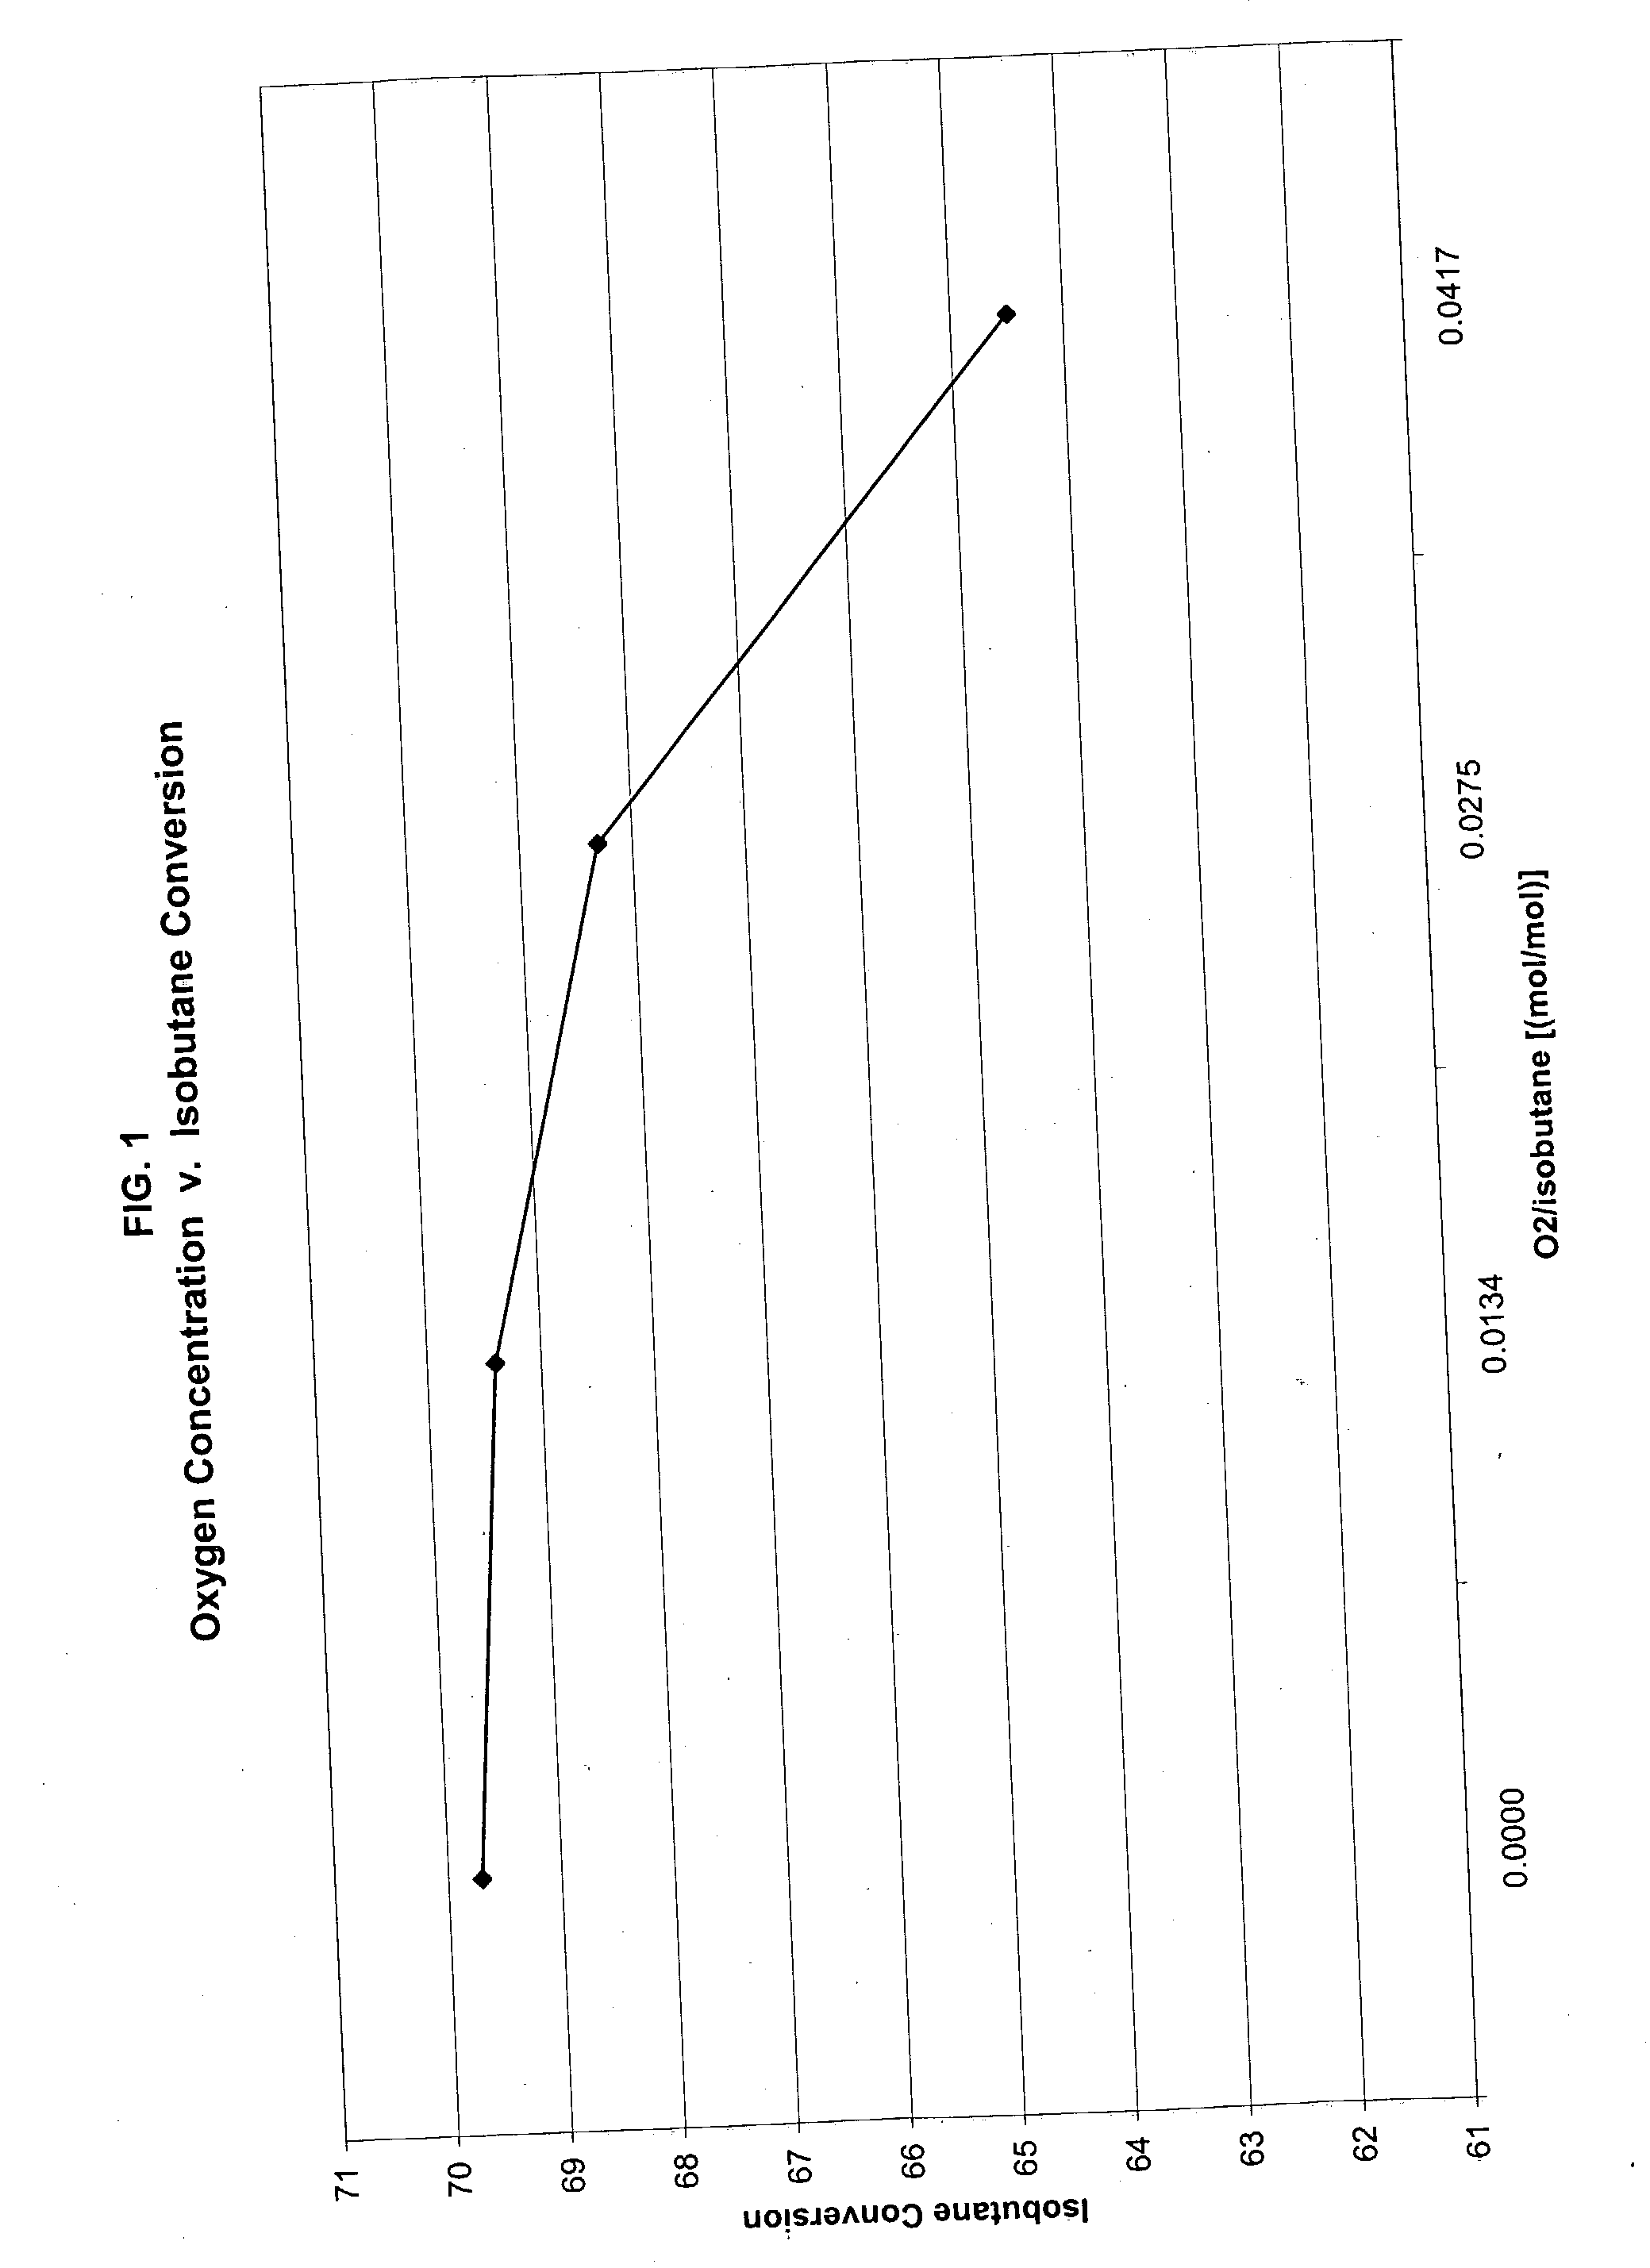 Dehydrogenation process for olefins